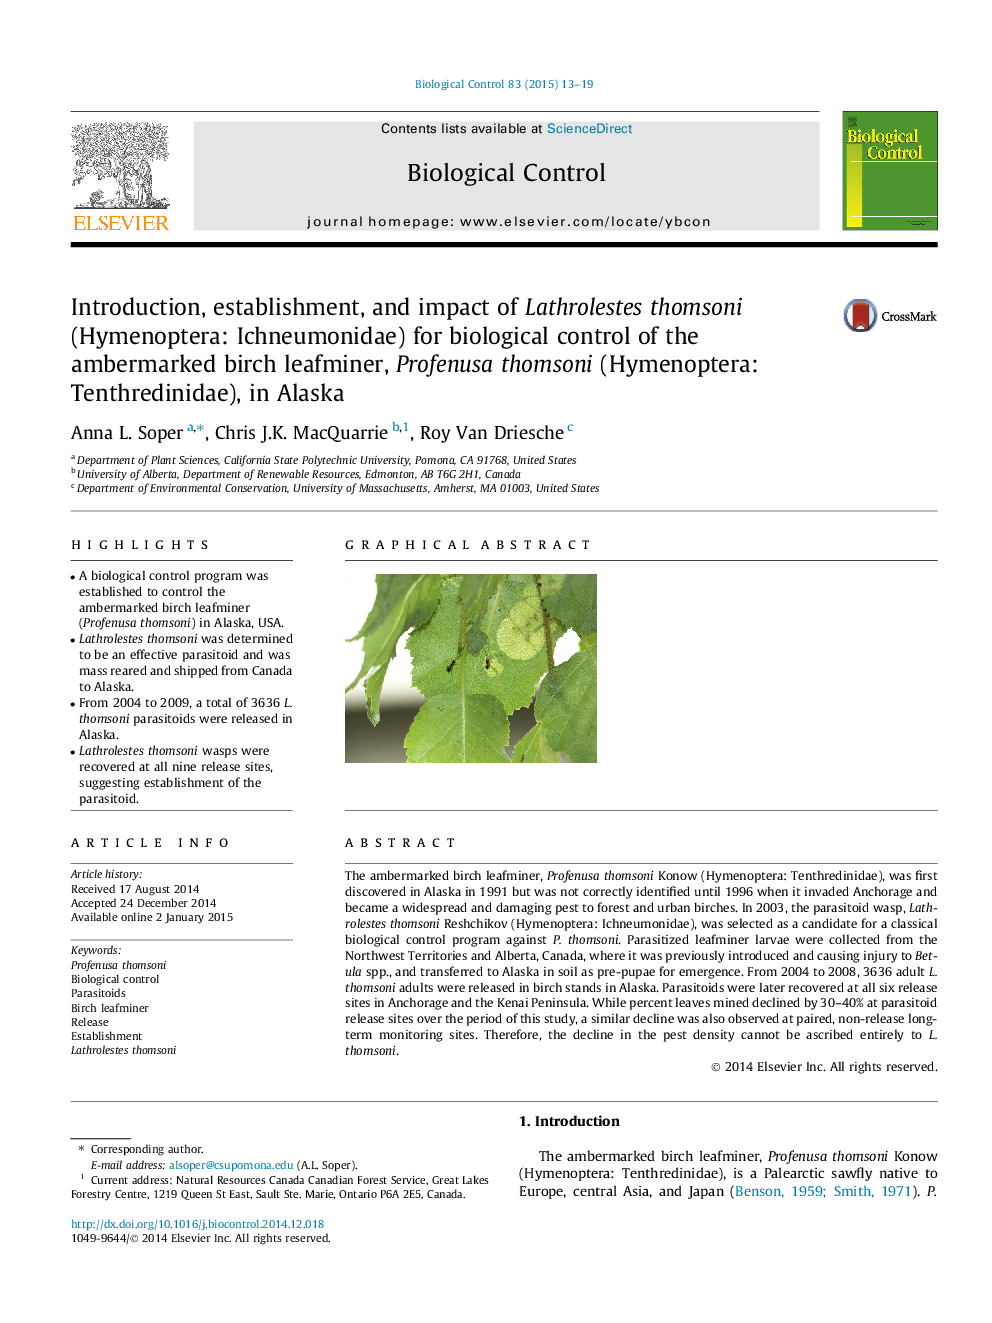 Introduction, establishment, and impact of Lathrolestes thomsoni (Hymenoptera: Ichneumonidae) for biological control of the ambermarked birch leafminer, Profenusa thomsoni (Hymenoptera: Tenthredinidae), in Alaska